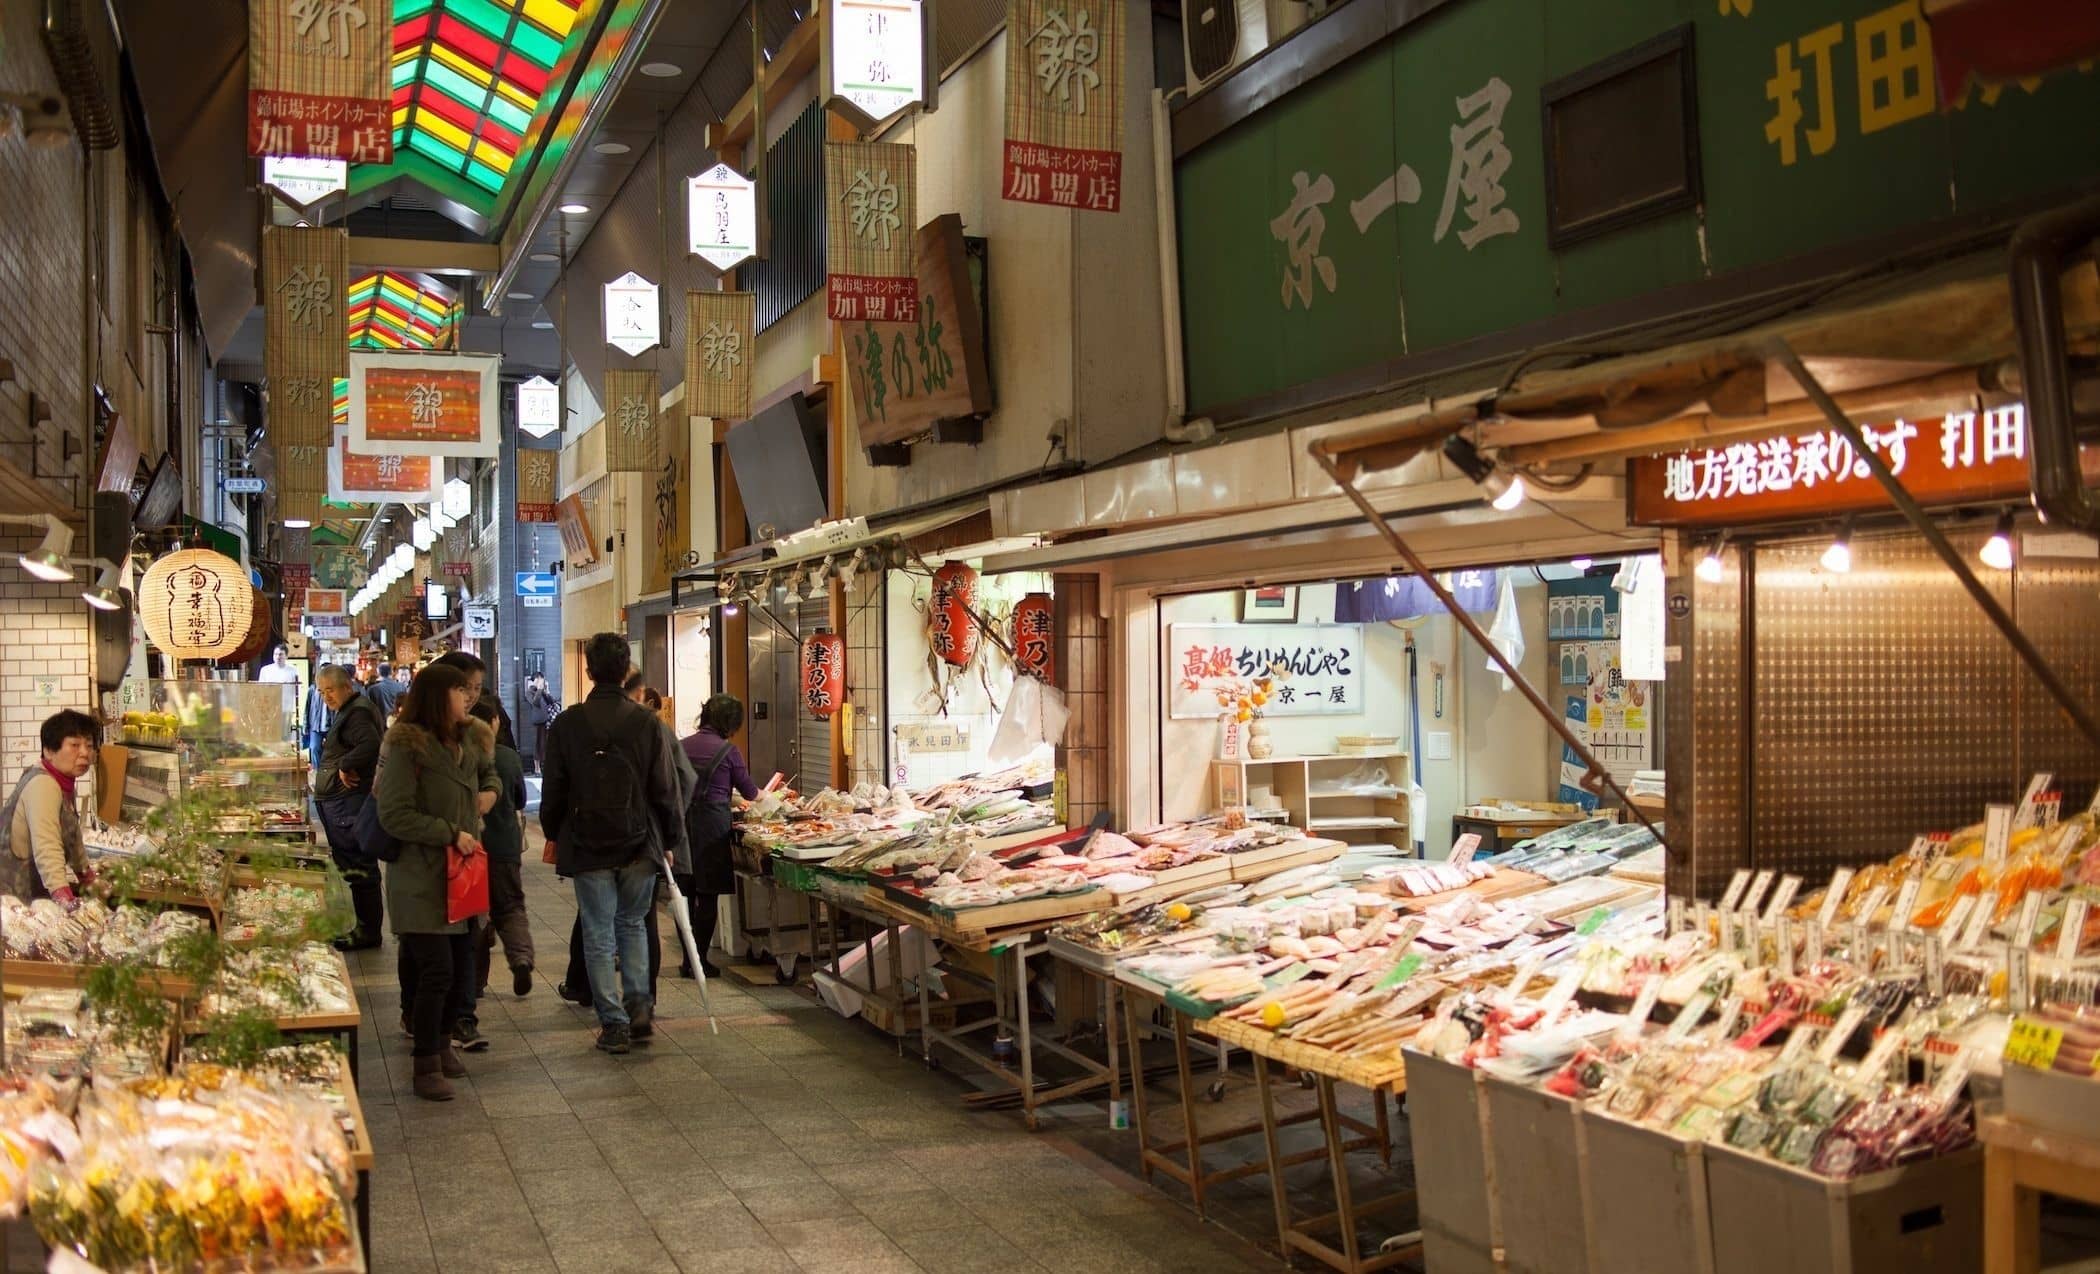 Nishiki Market as seen on Kyoto Food Tours